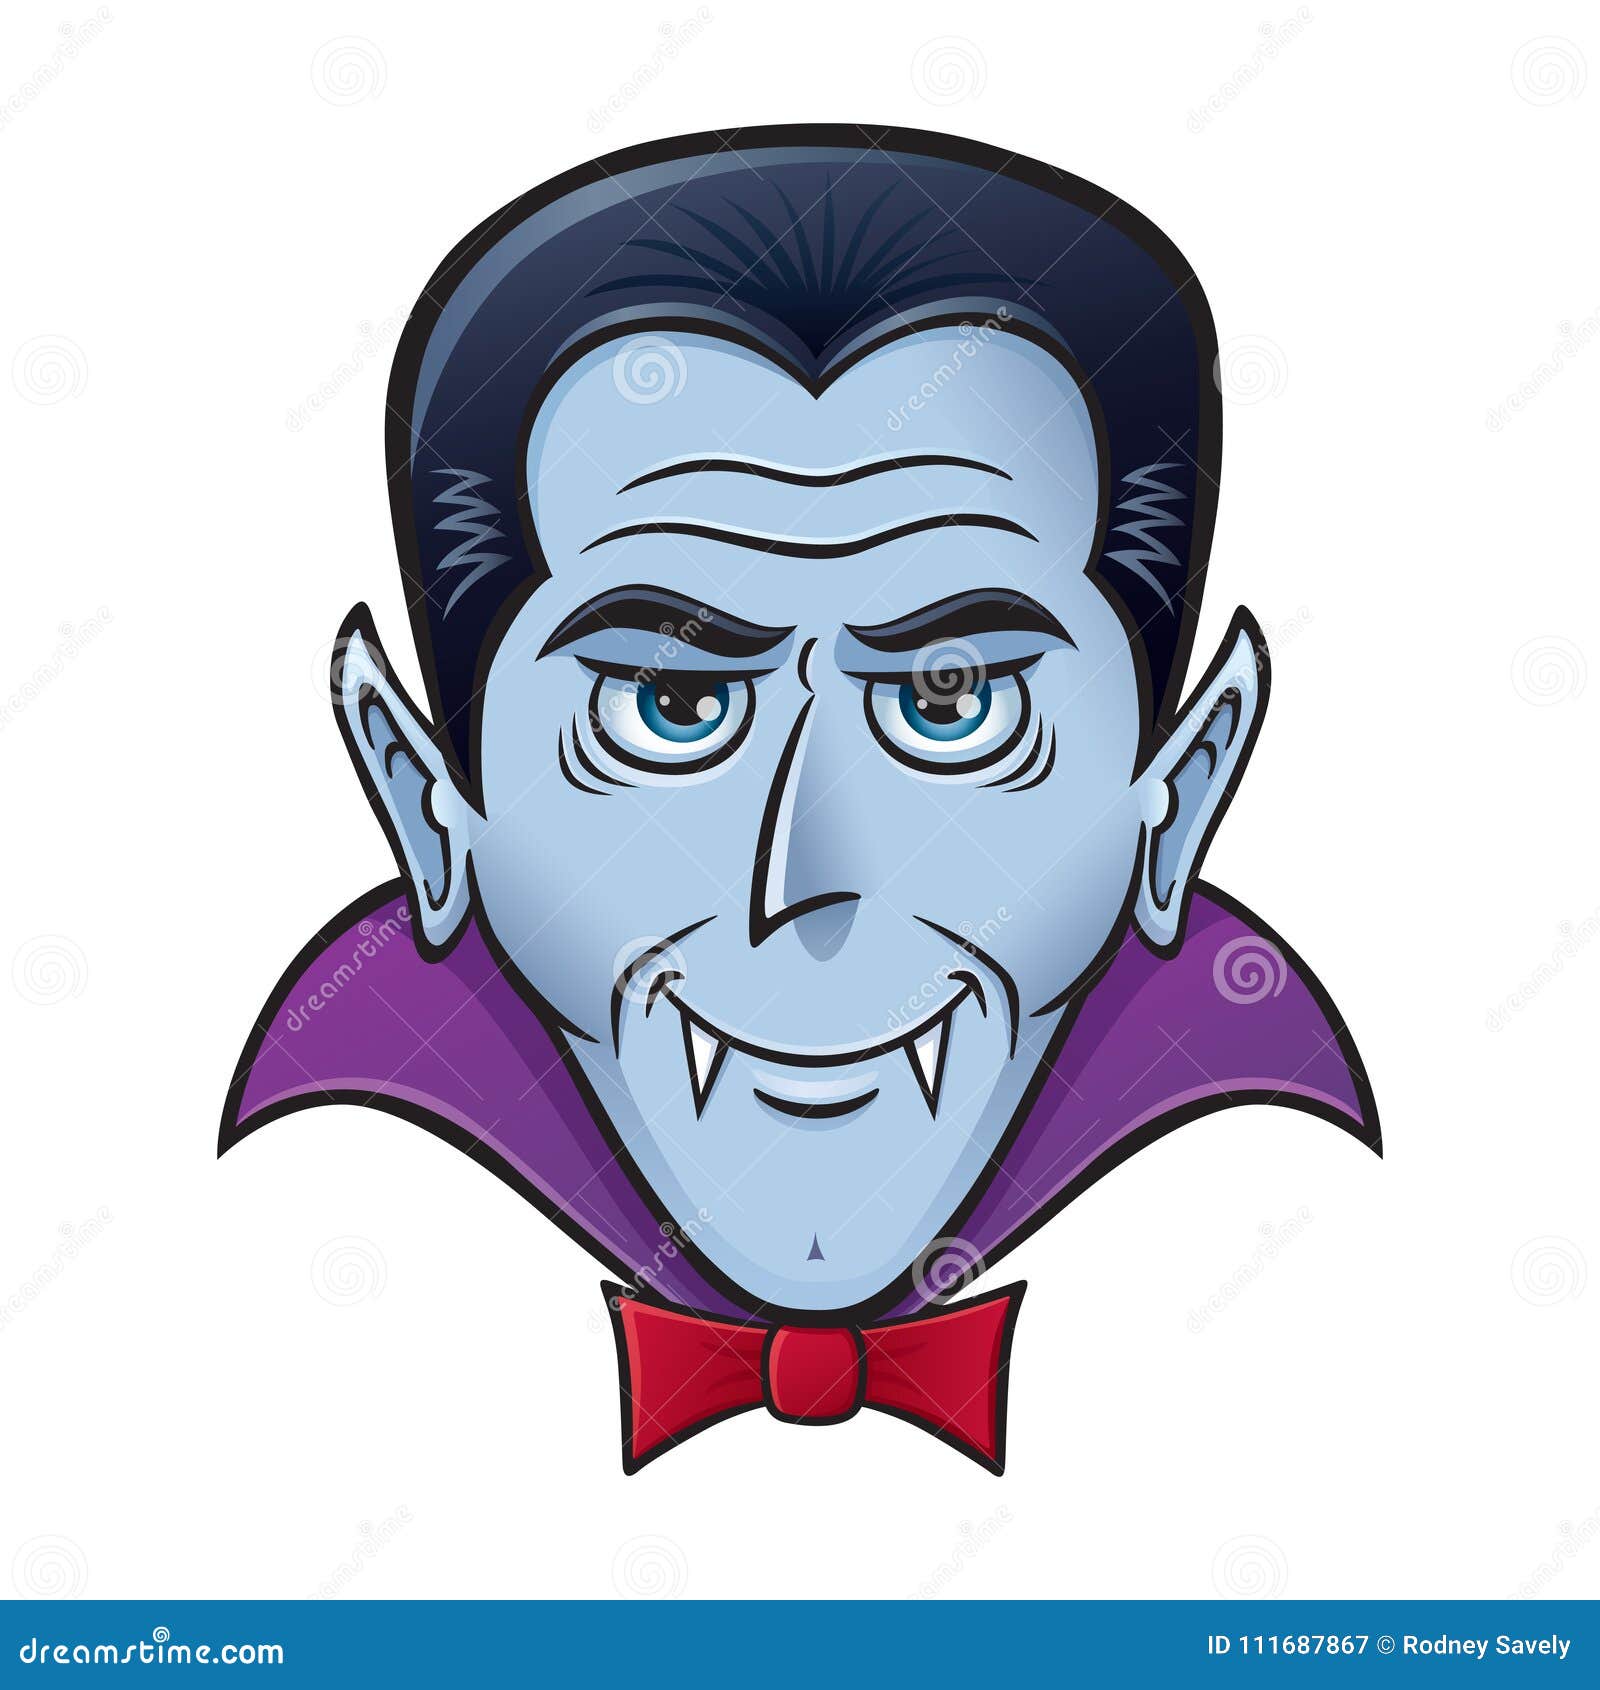 Vampiro Fofo. Retrato De Personagem Vampiro De Halloween No Estilo De  Desenho Animado Ilustração do Vetor - Ilustração de cara, vampiro: 250623142